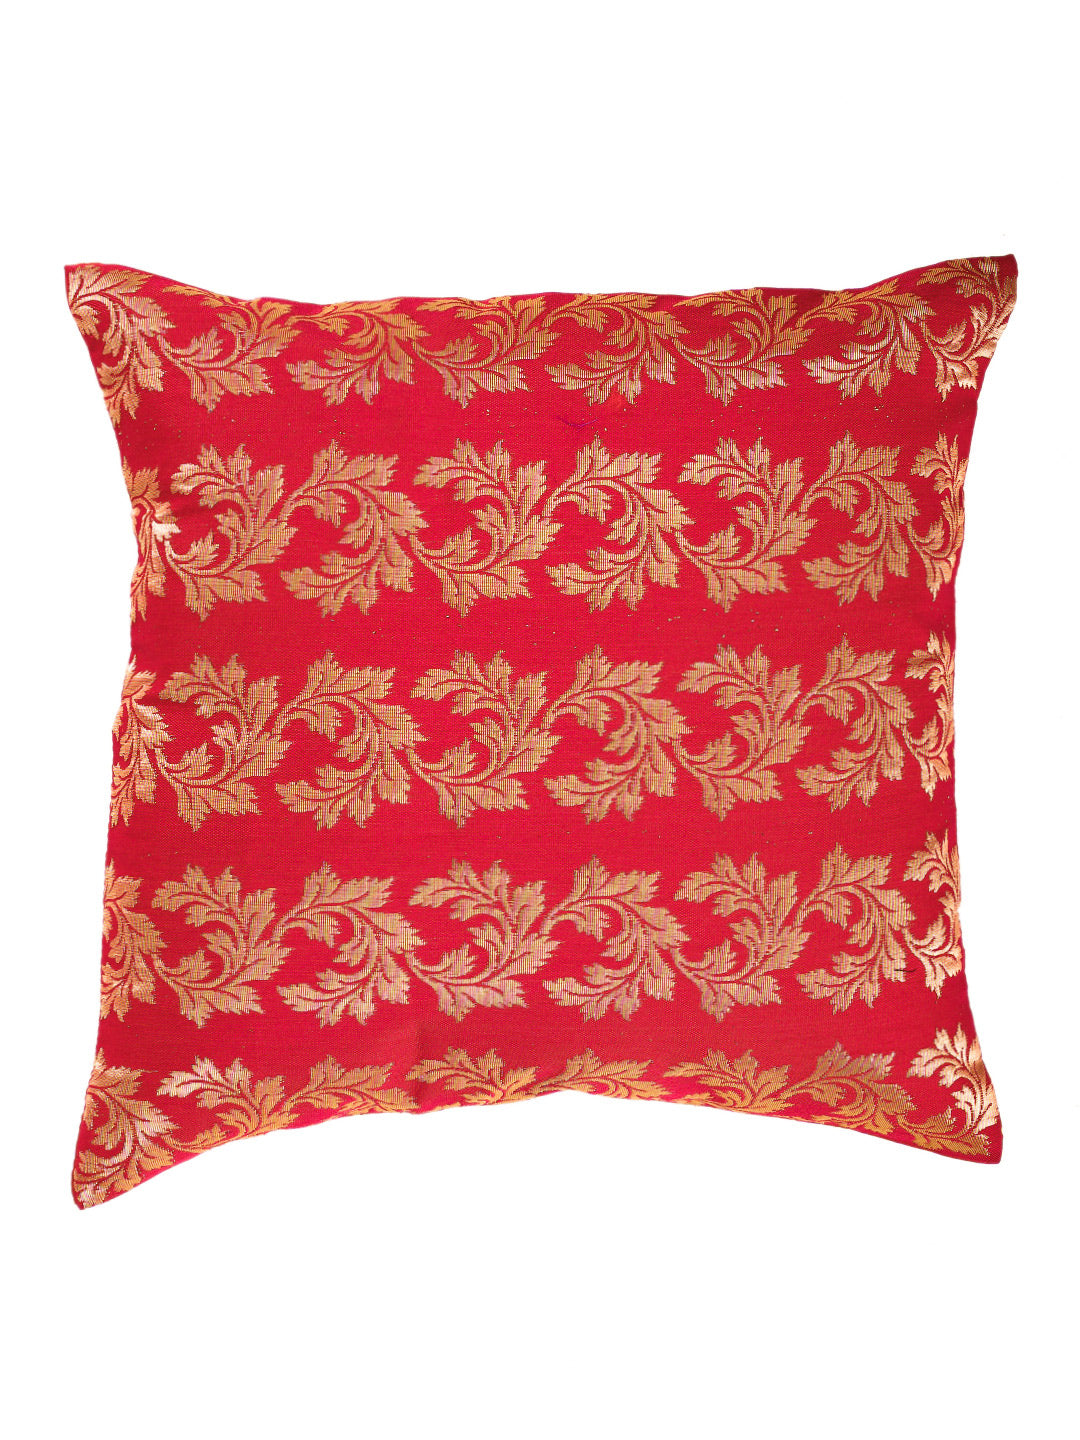 Silkfab Set 0f 5 Decorative Silk Cushion Covers (16x16) Floral Red - SILKFAB